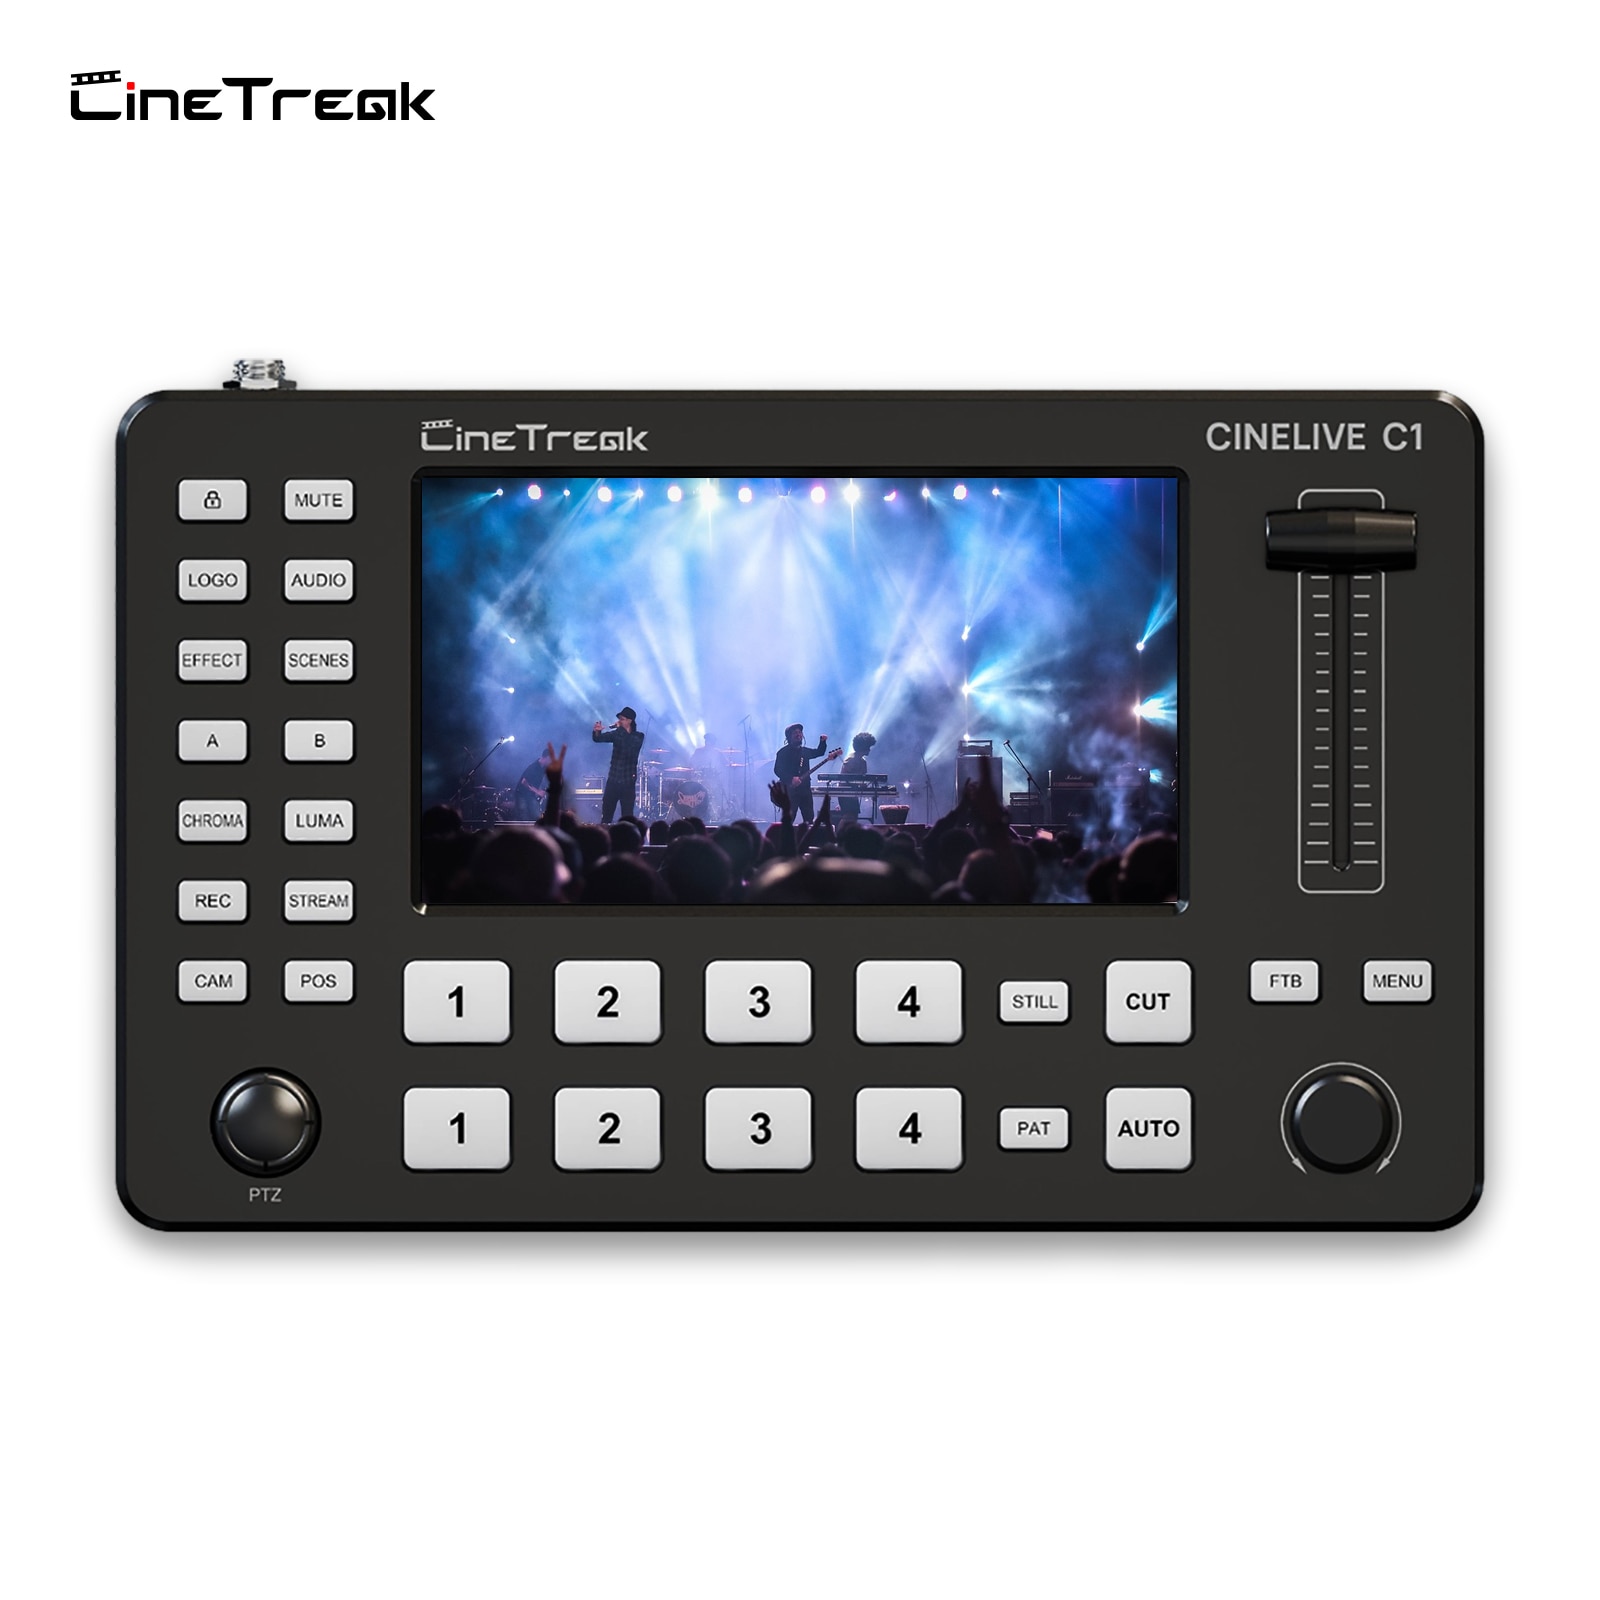 CINETREAK-CINELIVE C1 5 인치 FHD LCD 스크린 4 채널 HDMI 비디오 믹서 스위처, 크로마 키 녹화 PTZ 컨트롤 라이브 스트리밍용